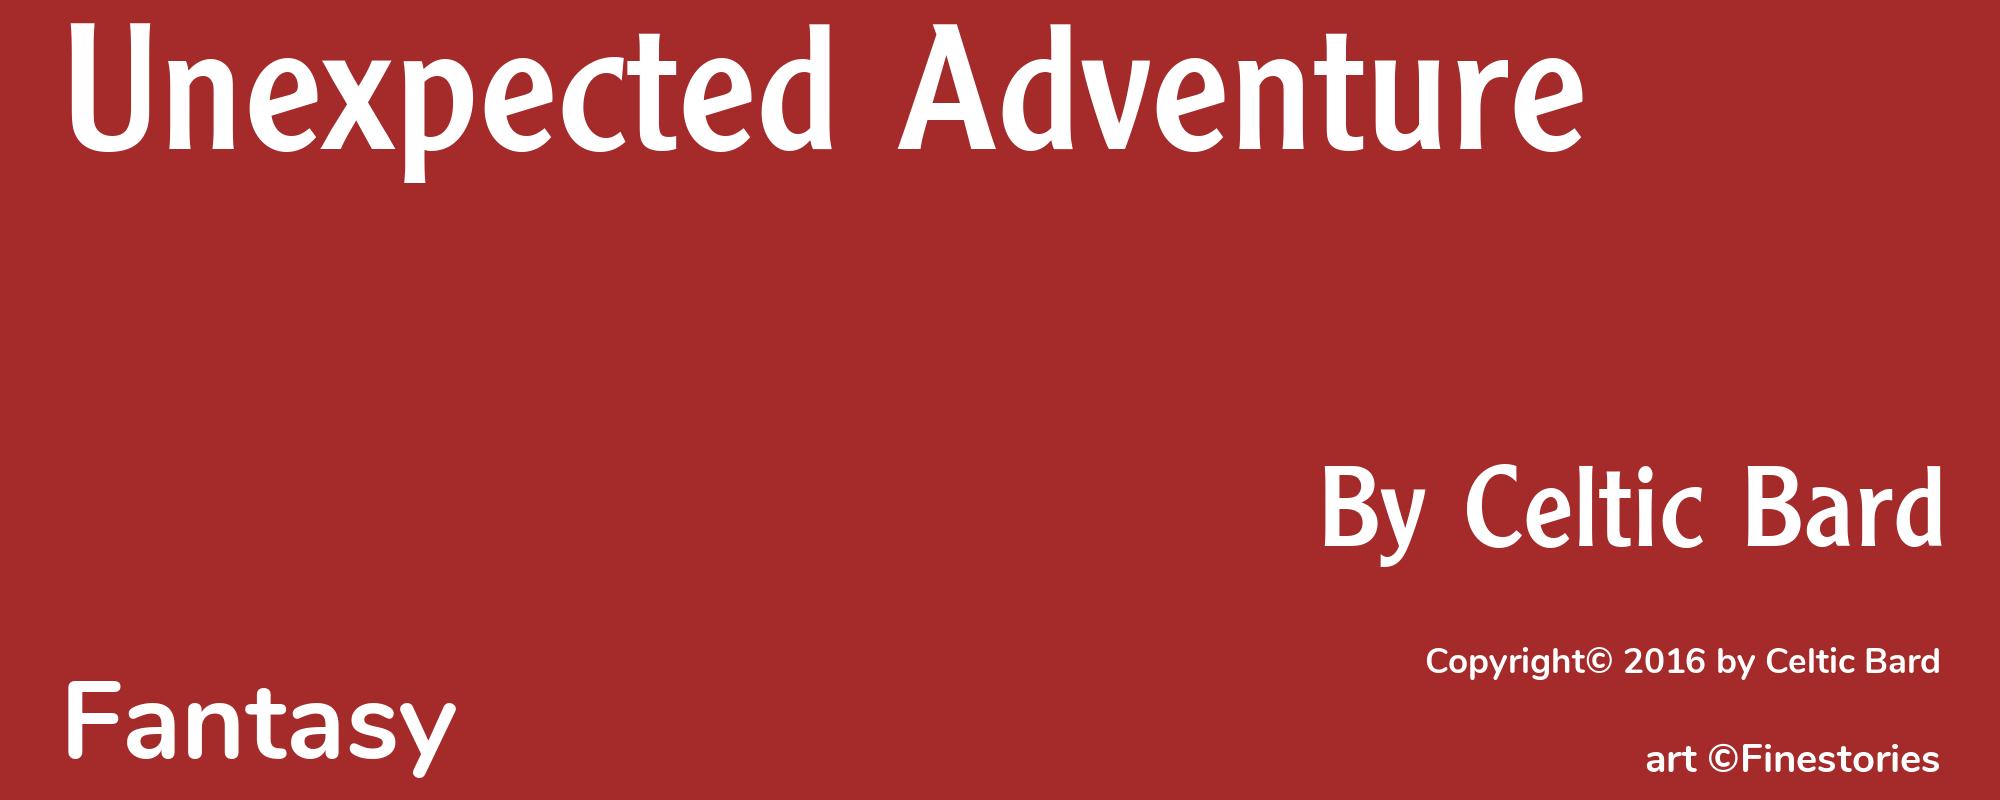 Unexpected Adventure - Cover